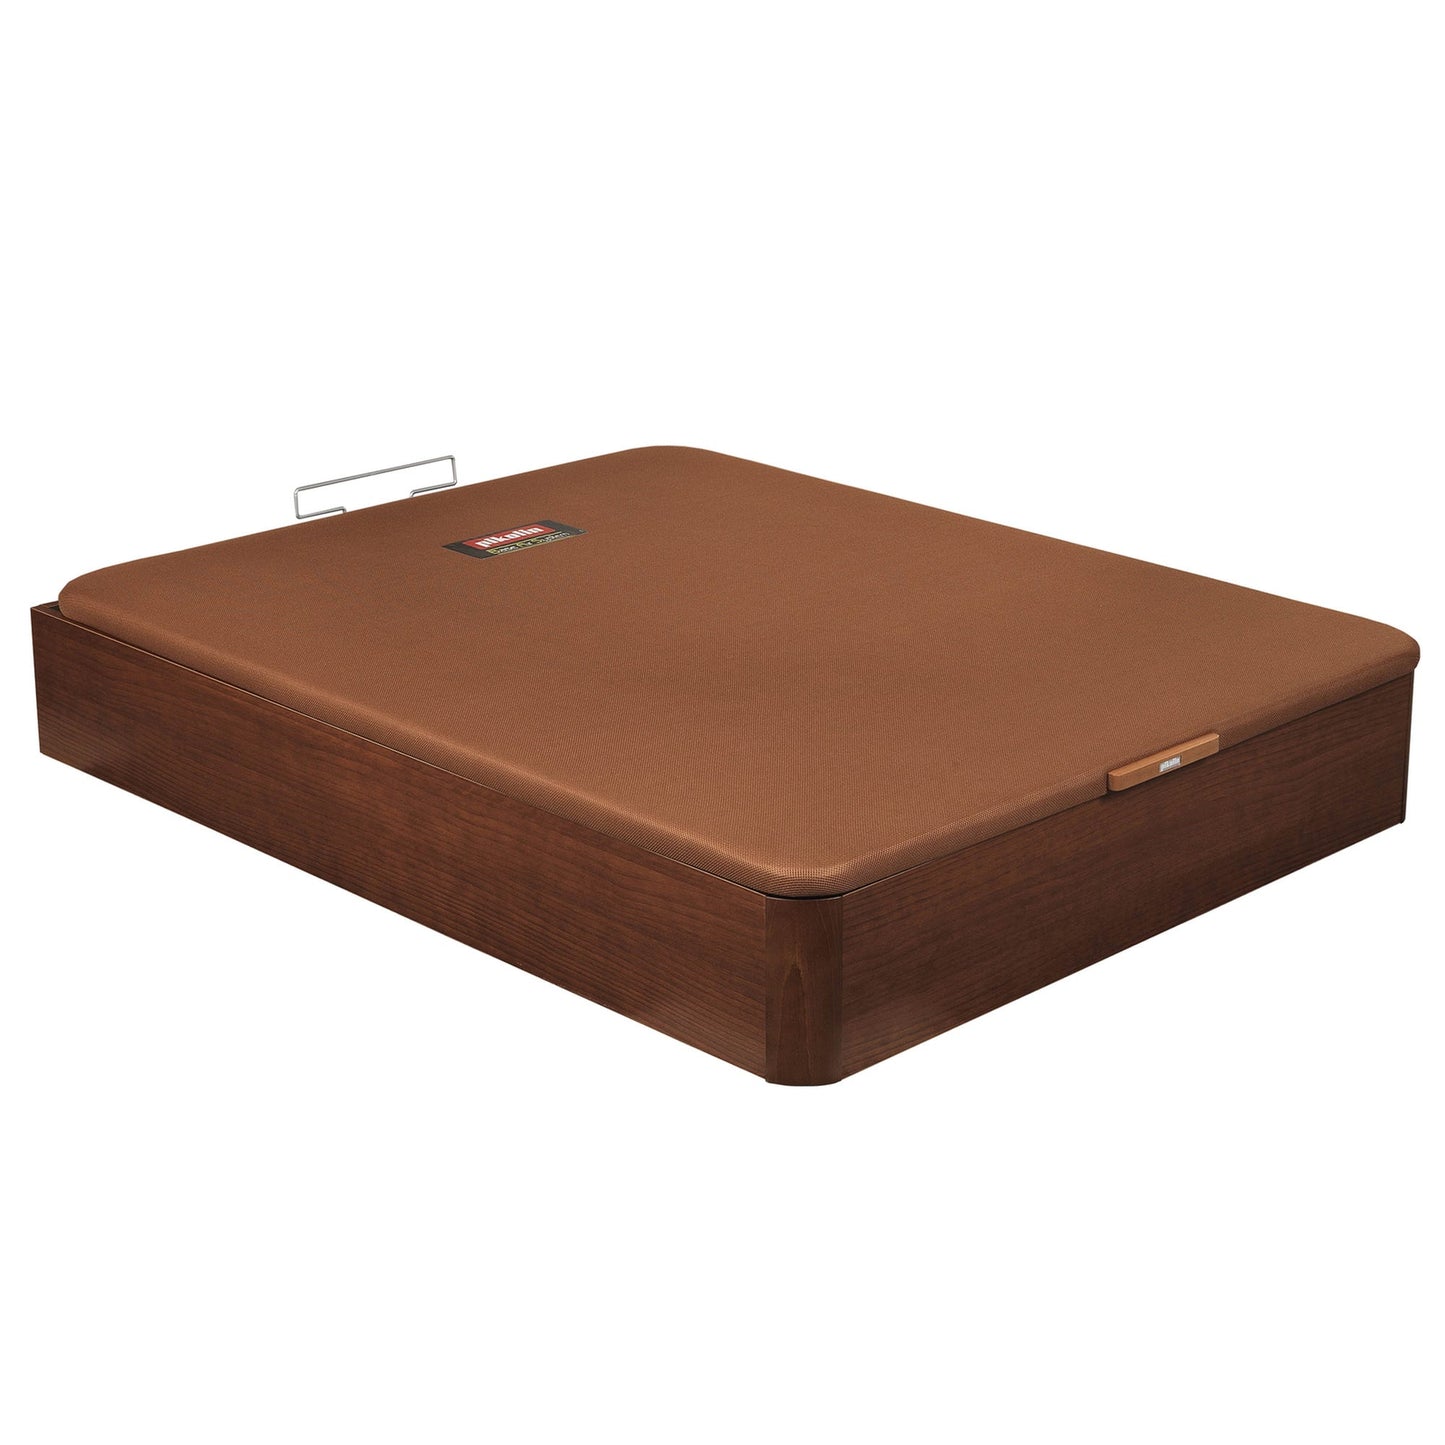 Canapé abatible de madera de color cerezo - NATURBOX CEREZO - 150x200